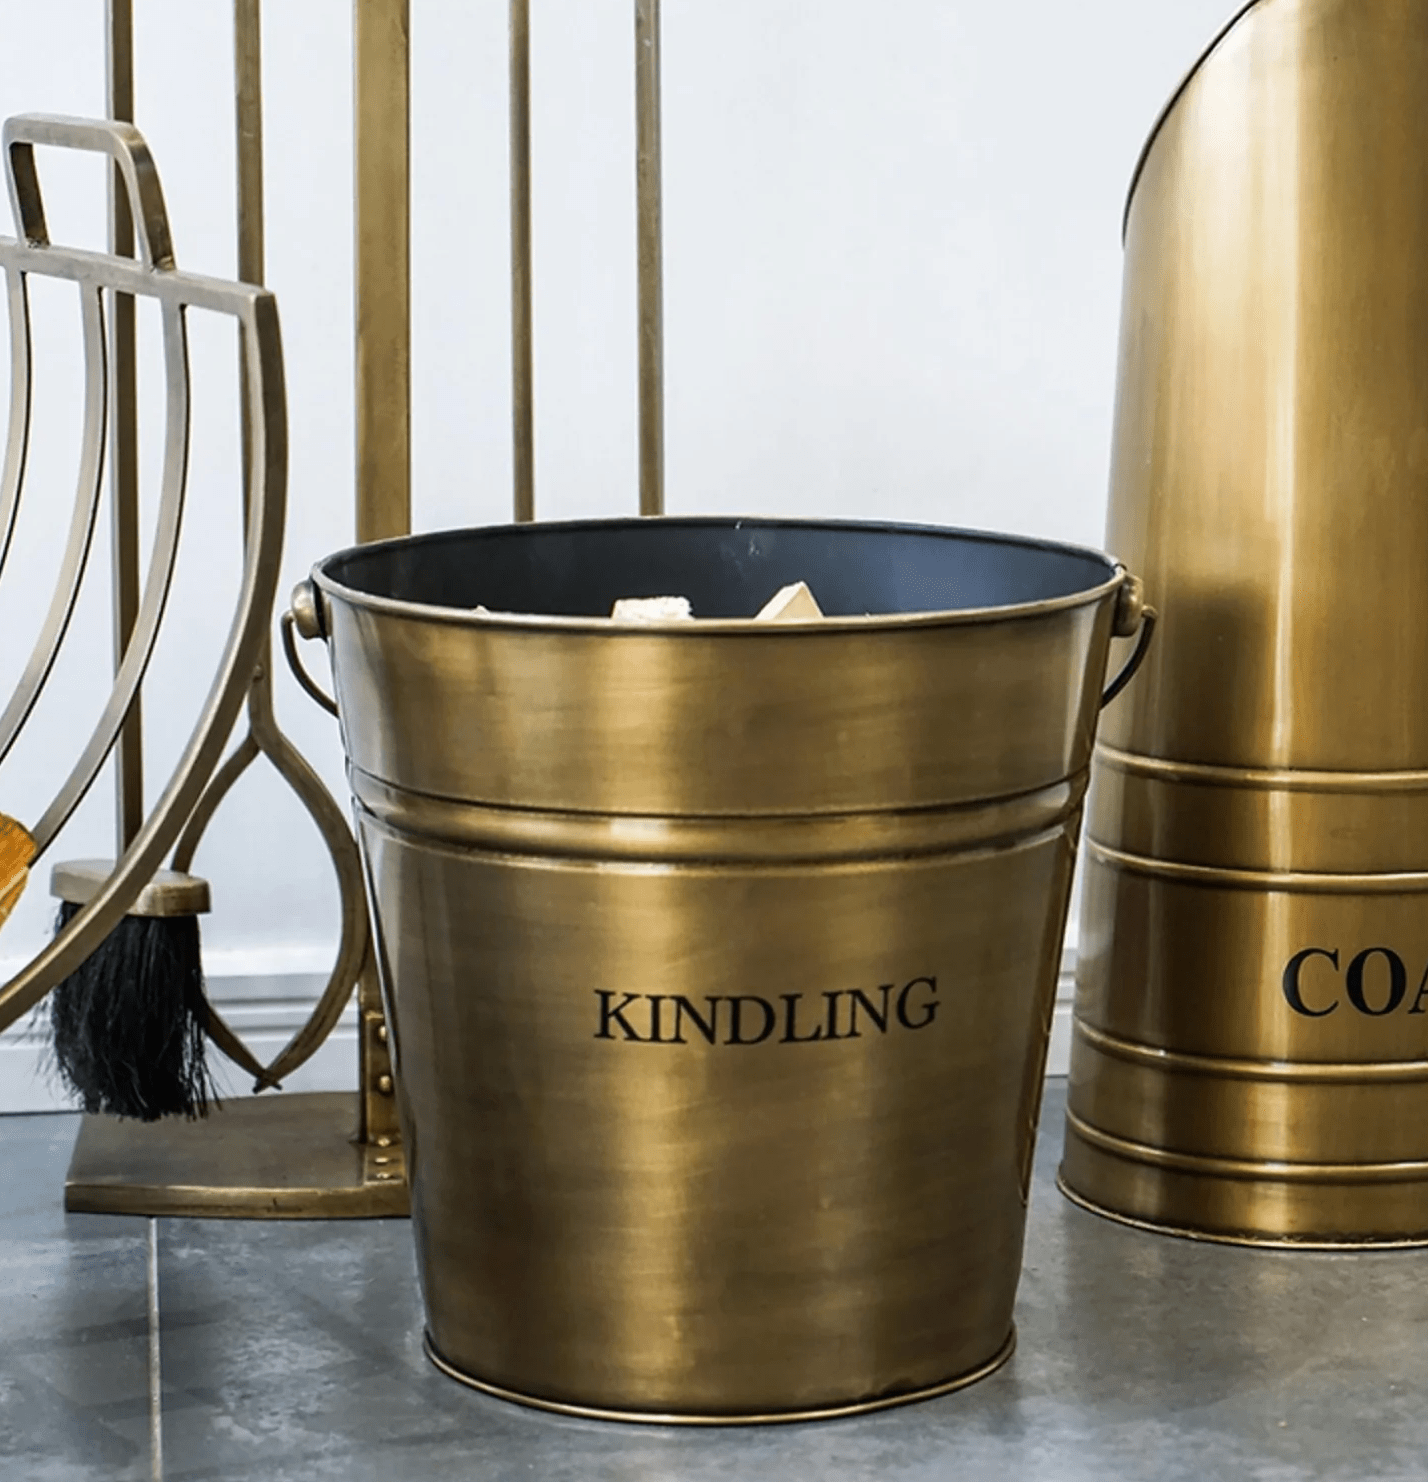 Brass kindling Bucket by Ivyline